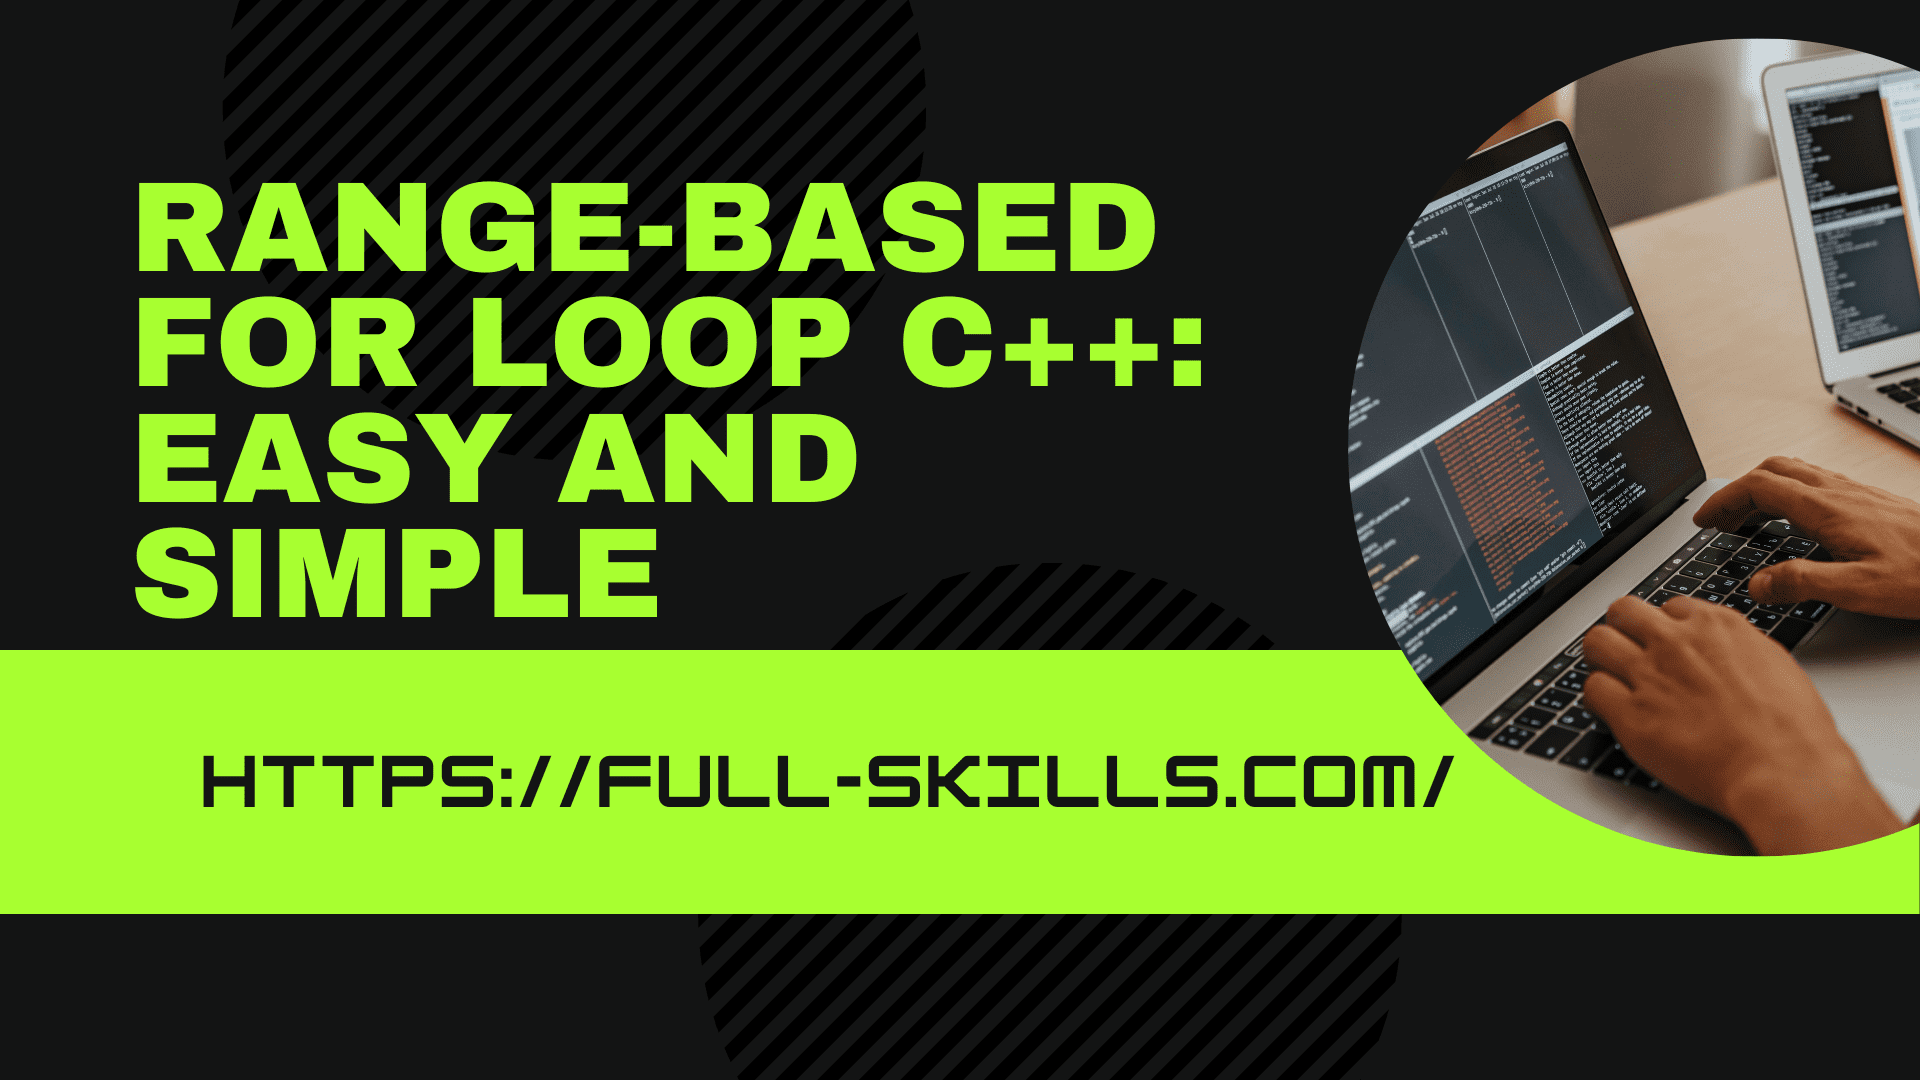 Range based for loop C++: Easy and simple